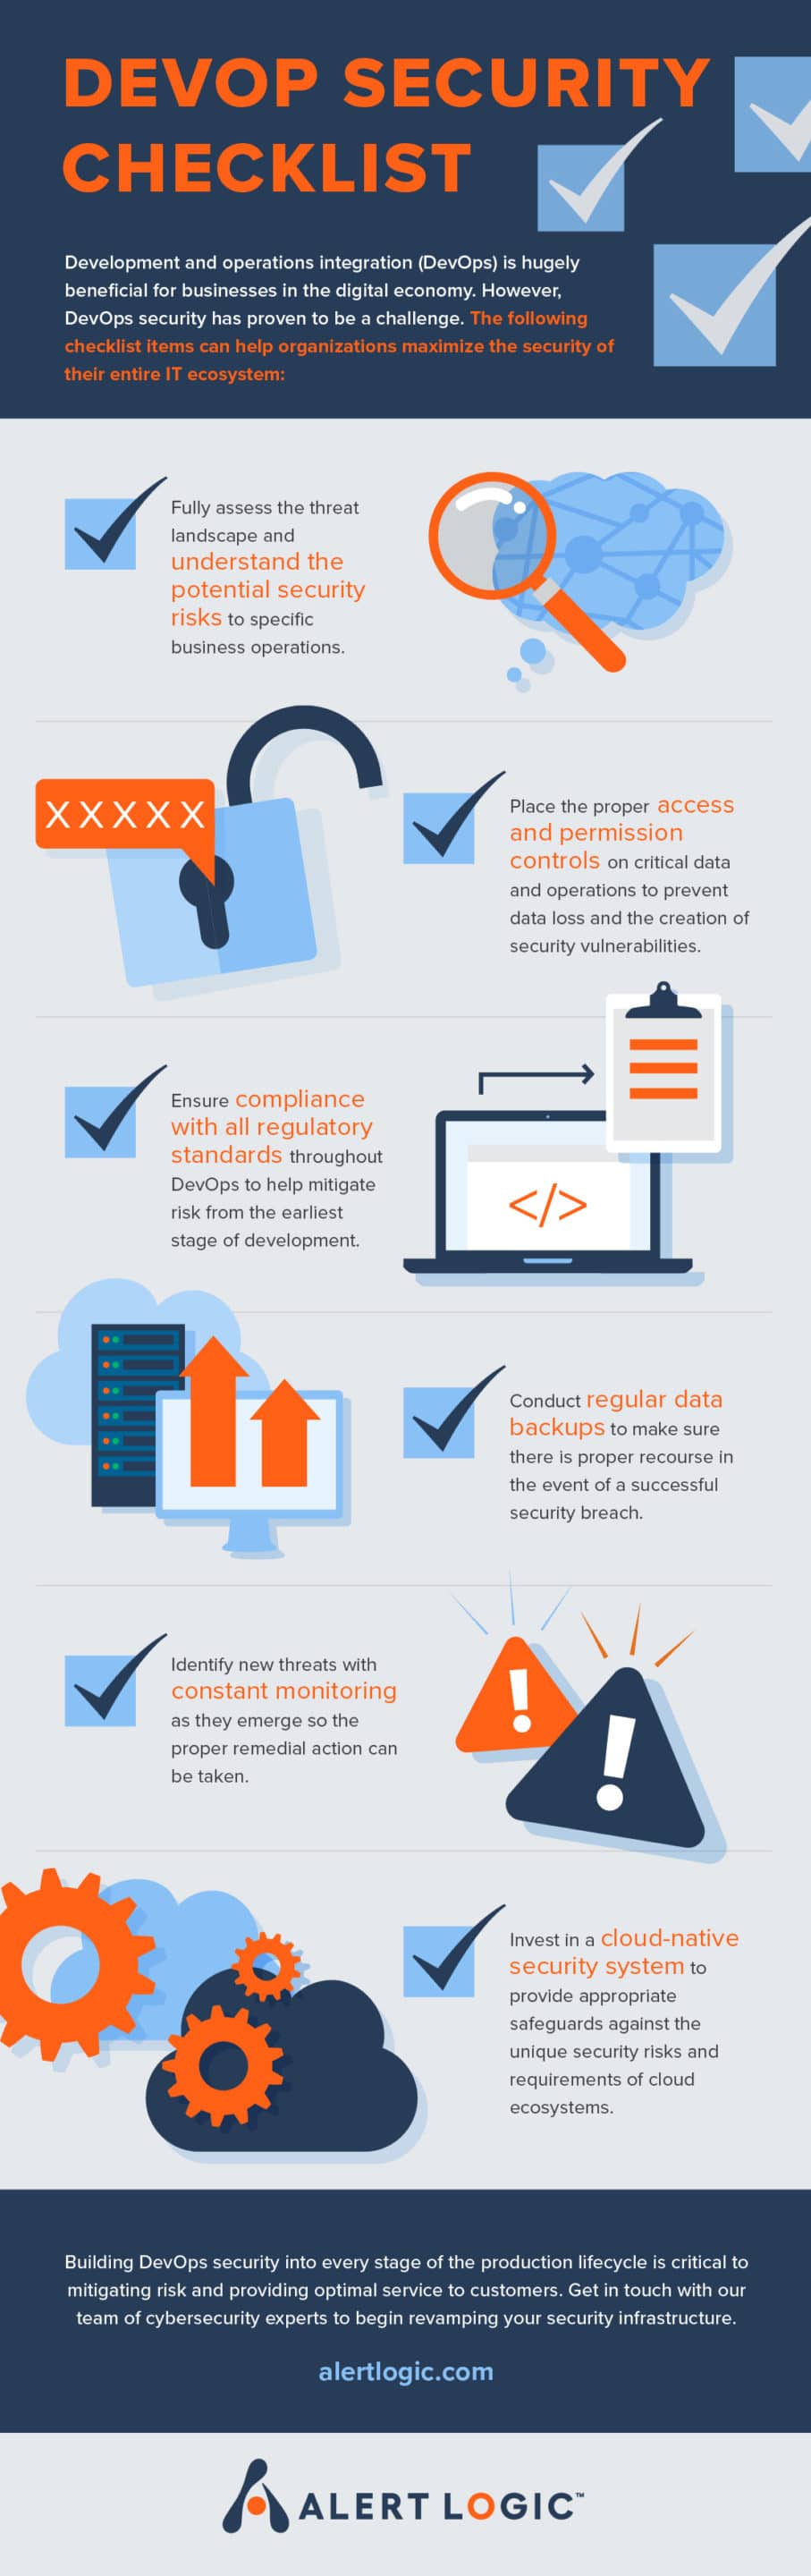 DevOps Security Checklist infographic